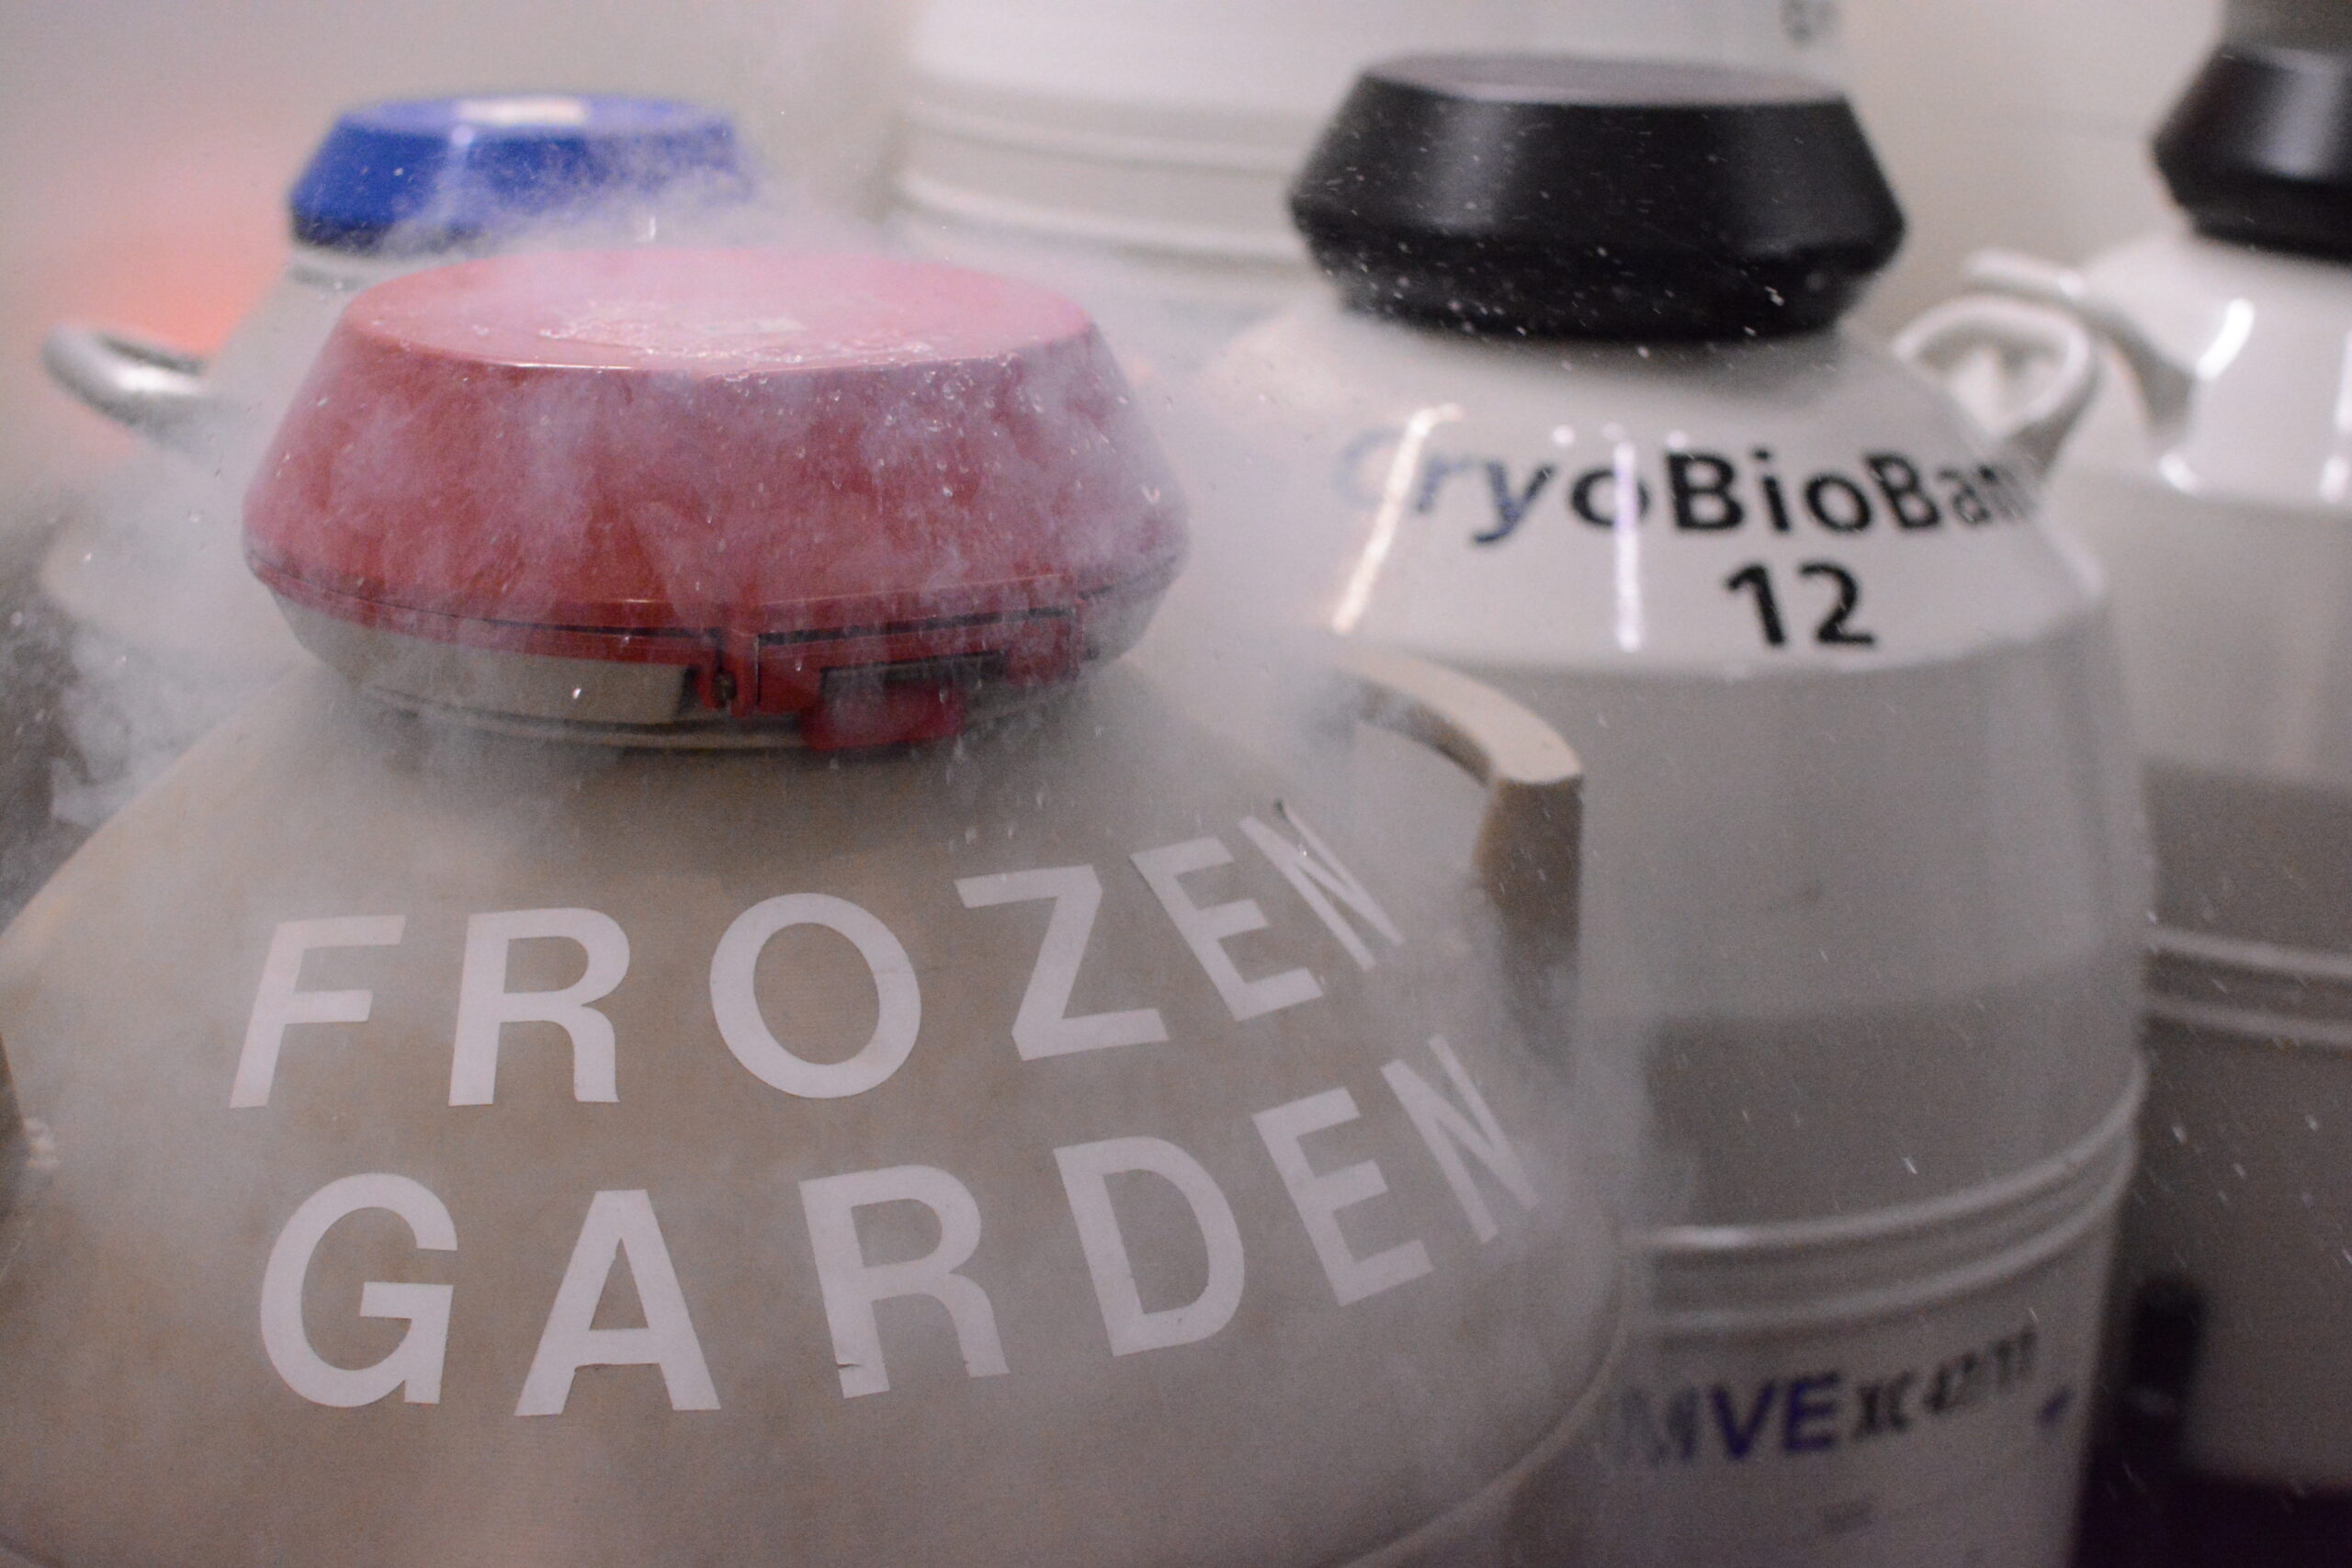 Frozen Garden Cryopreservation containers